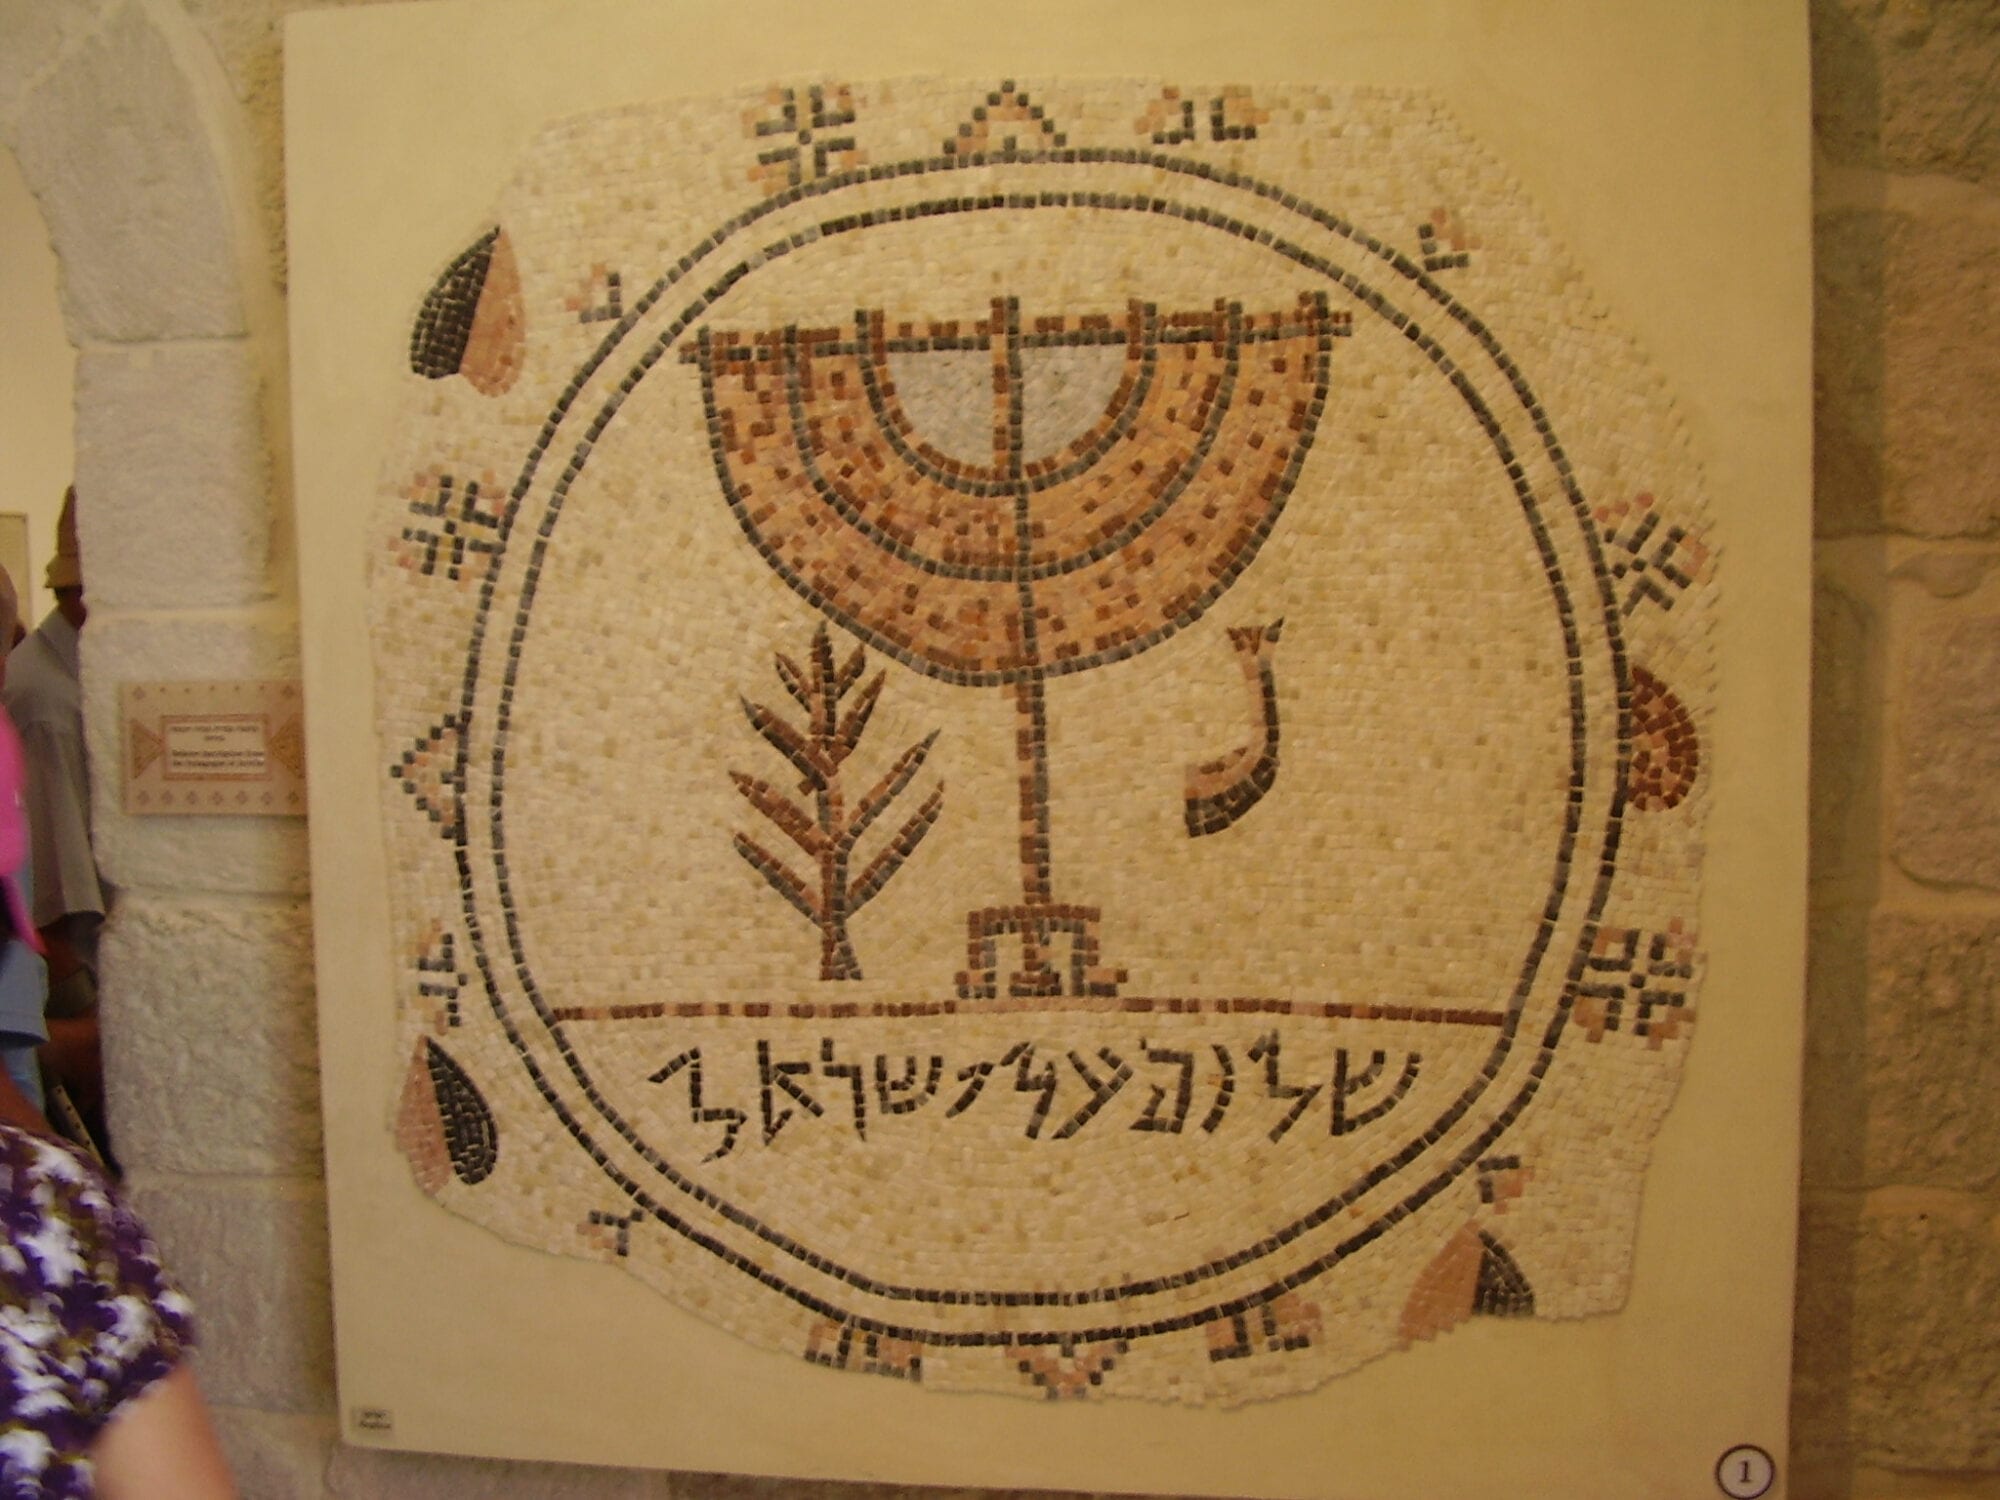 The Shalom al Israel Synagogue  With a mosaic full of Jewish symbolism